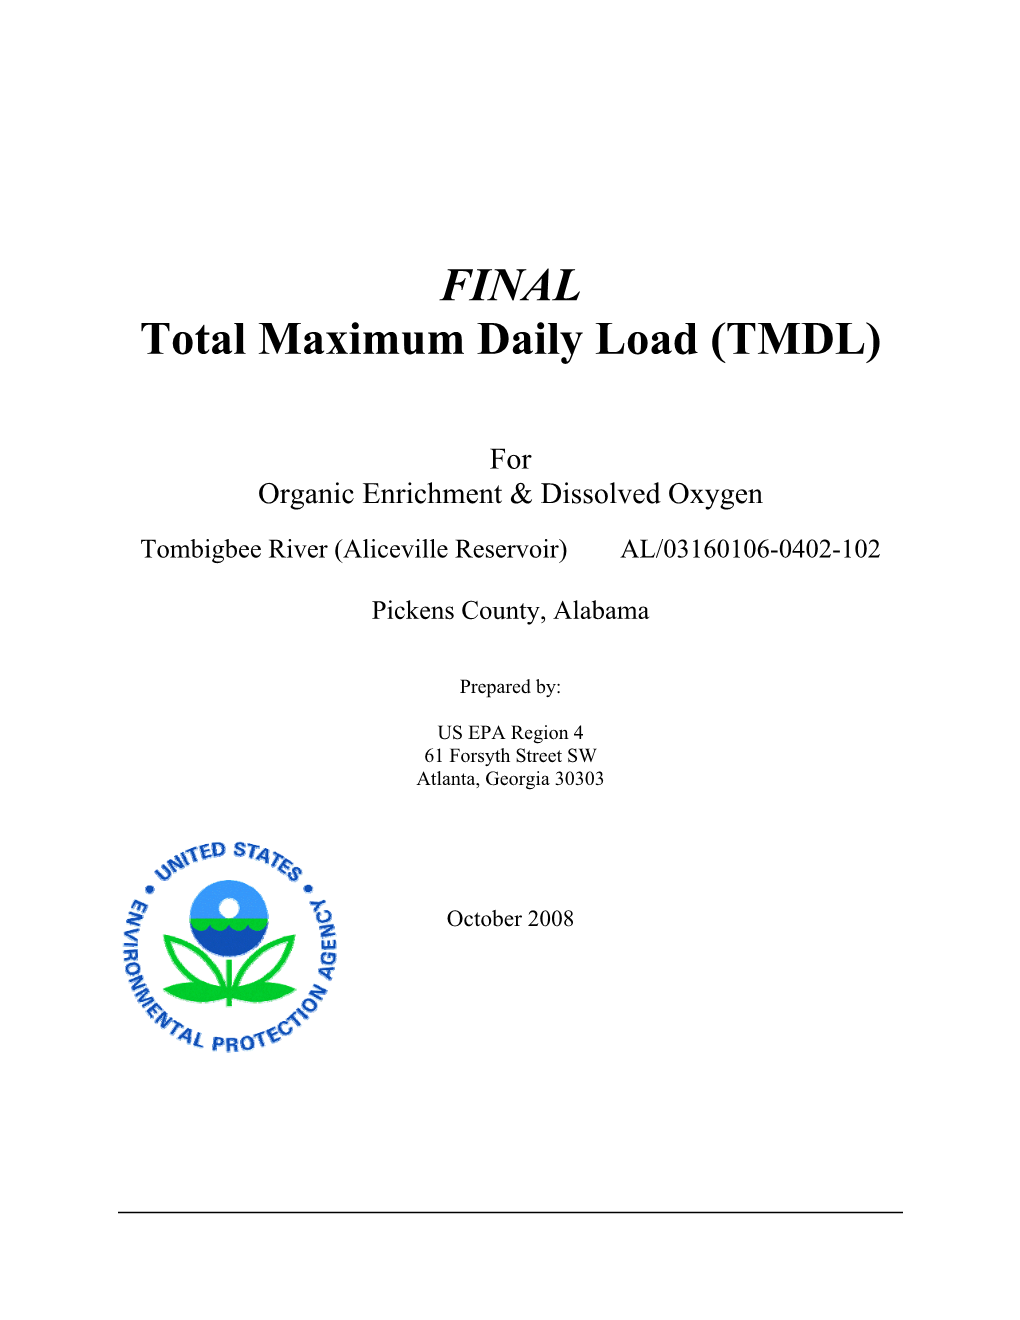 FINAL Total Maximum Daily Load (TMDL)